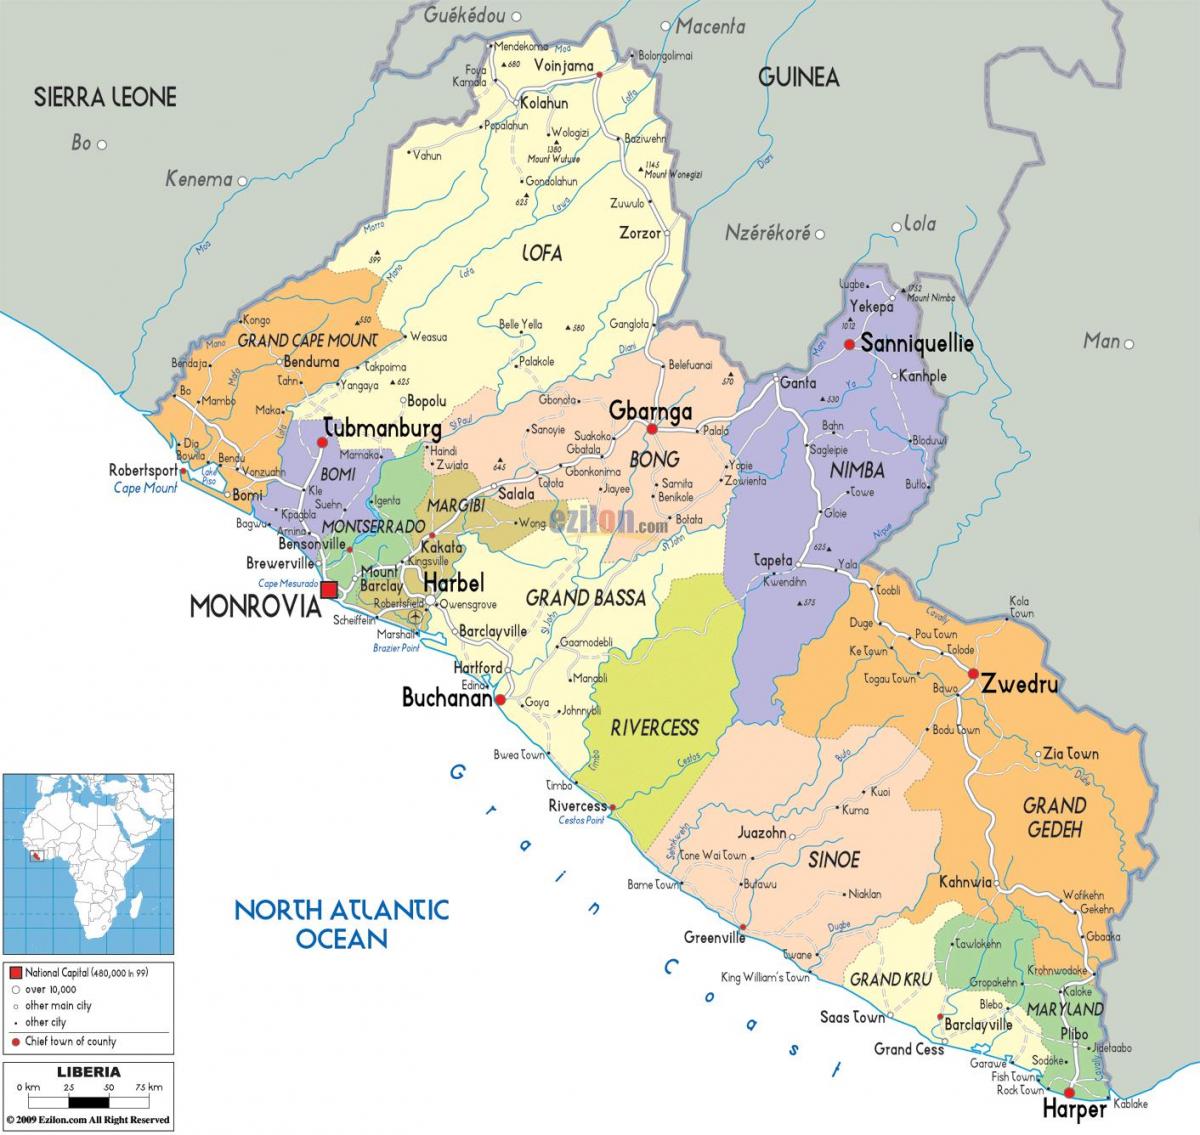 zemljevid Liberija državi